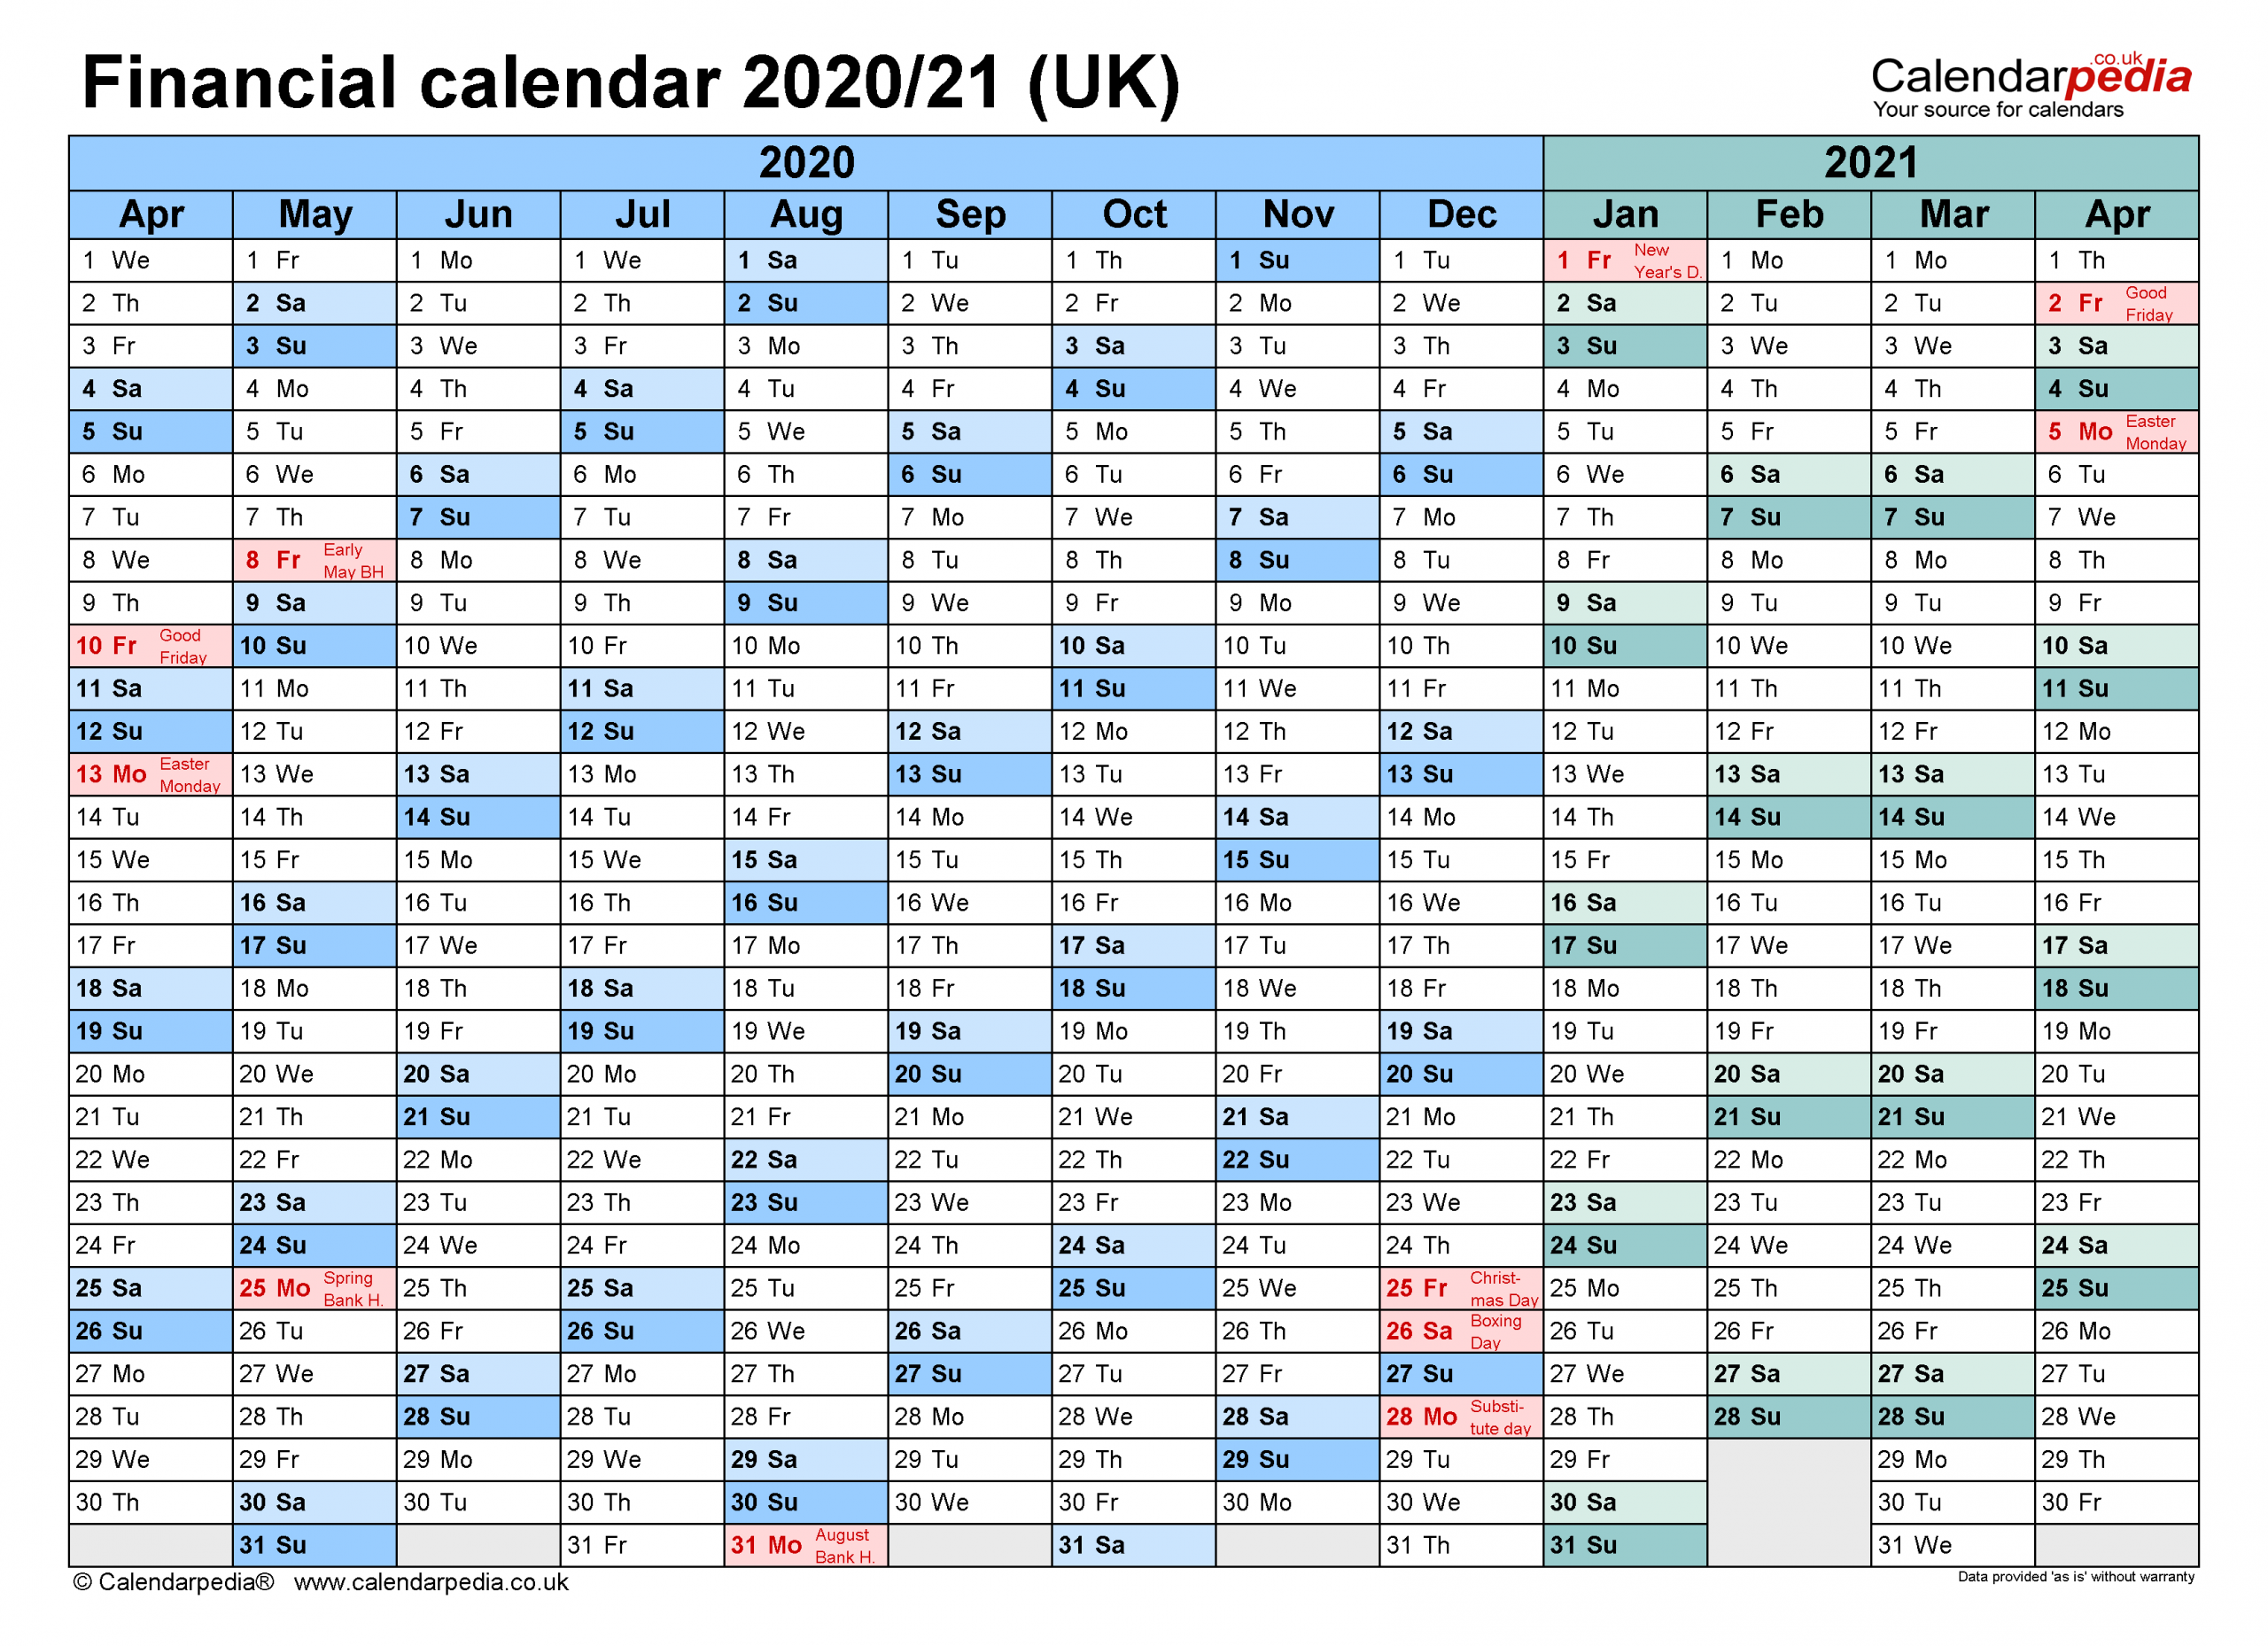 Financial Calendars 2020/21 (Uk) In Microsoft Word Format